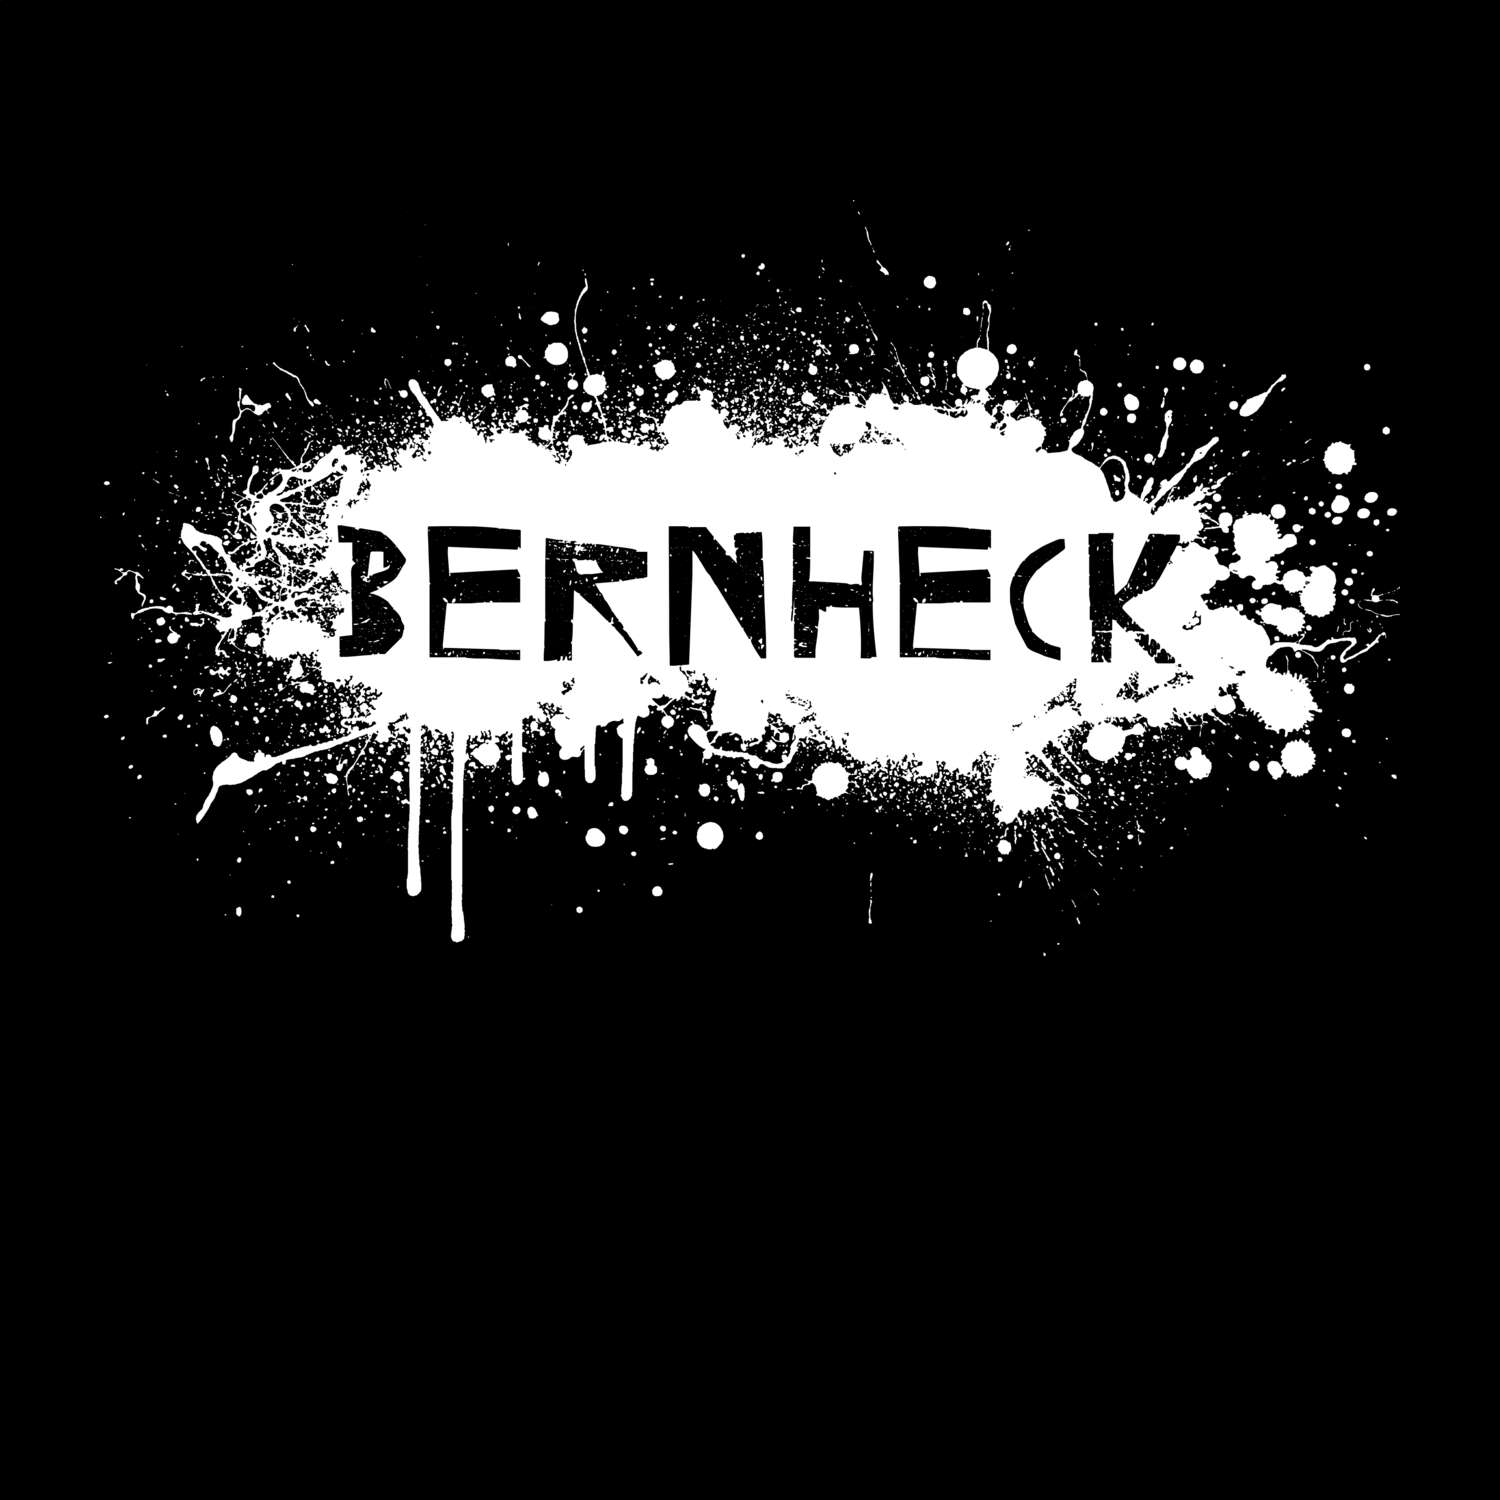 Bernheck T-Shirt »Paint Splash Punk«